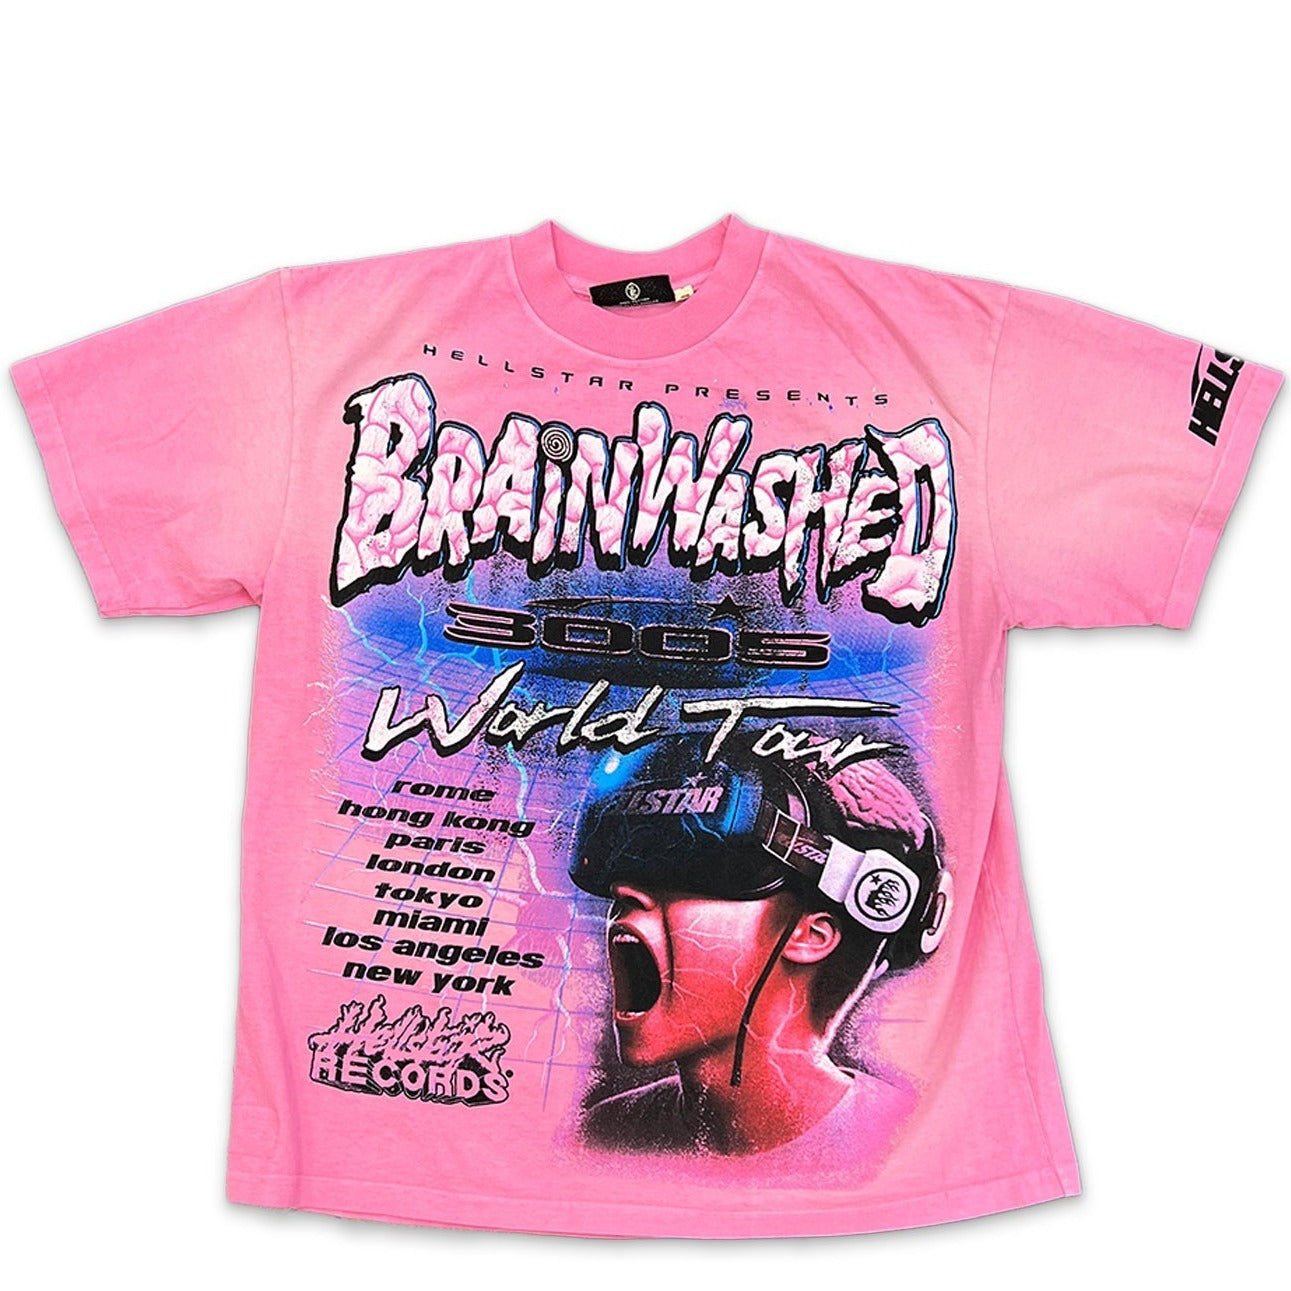 HellStar Brainwashed World Tour Tee "Pink"